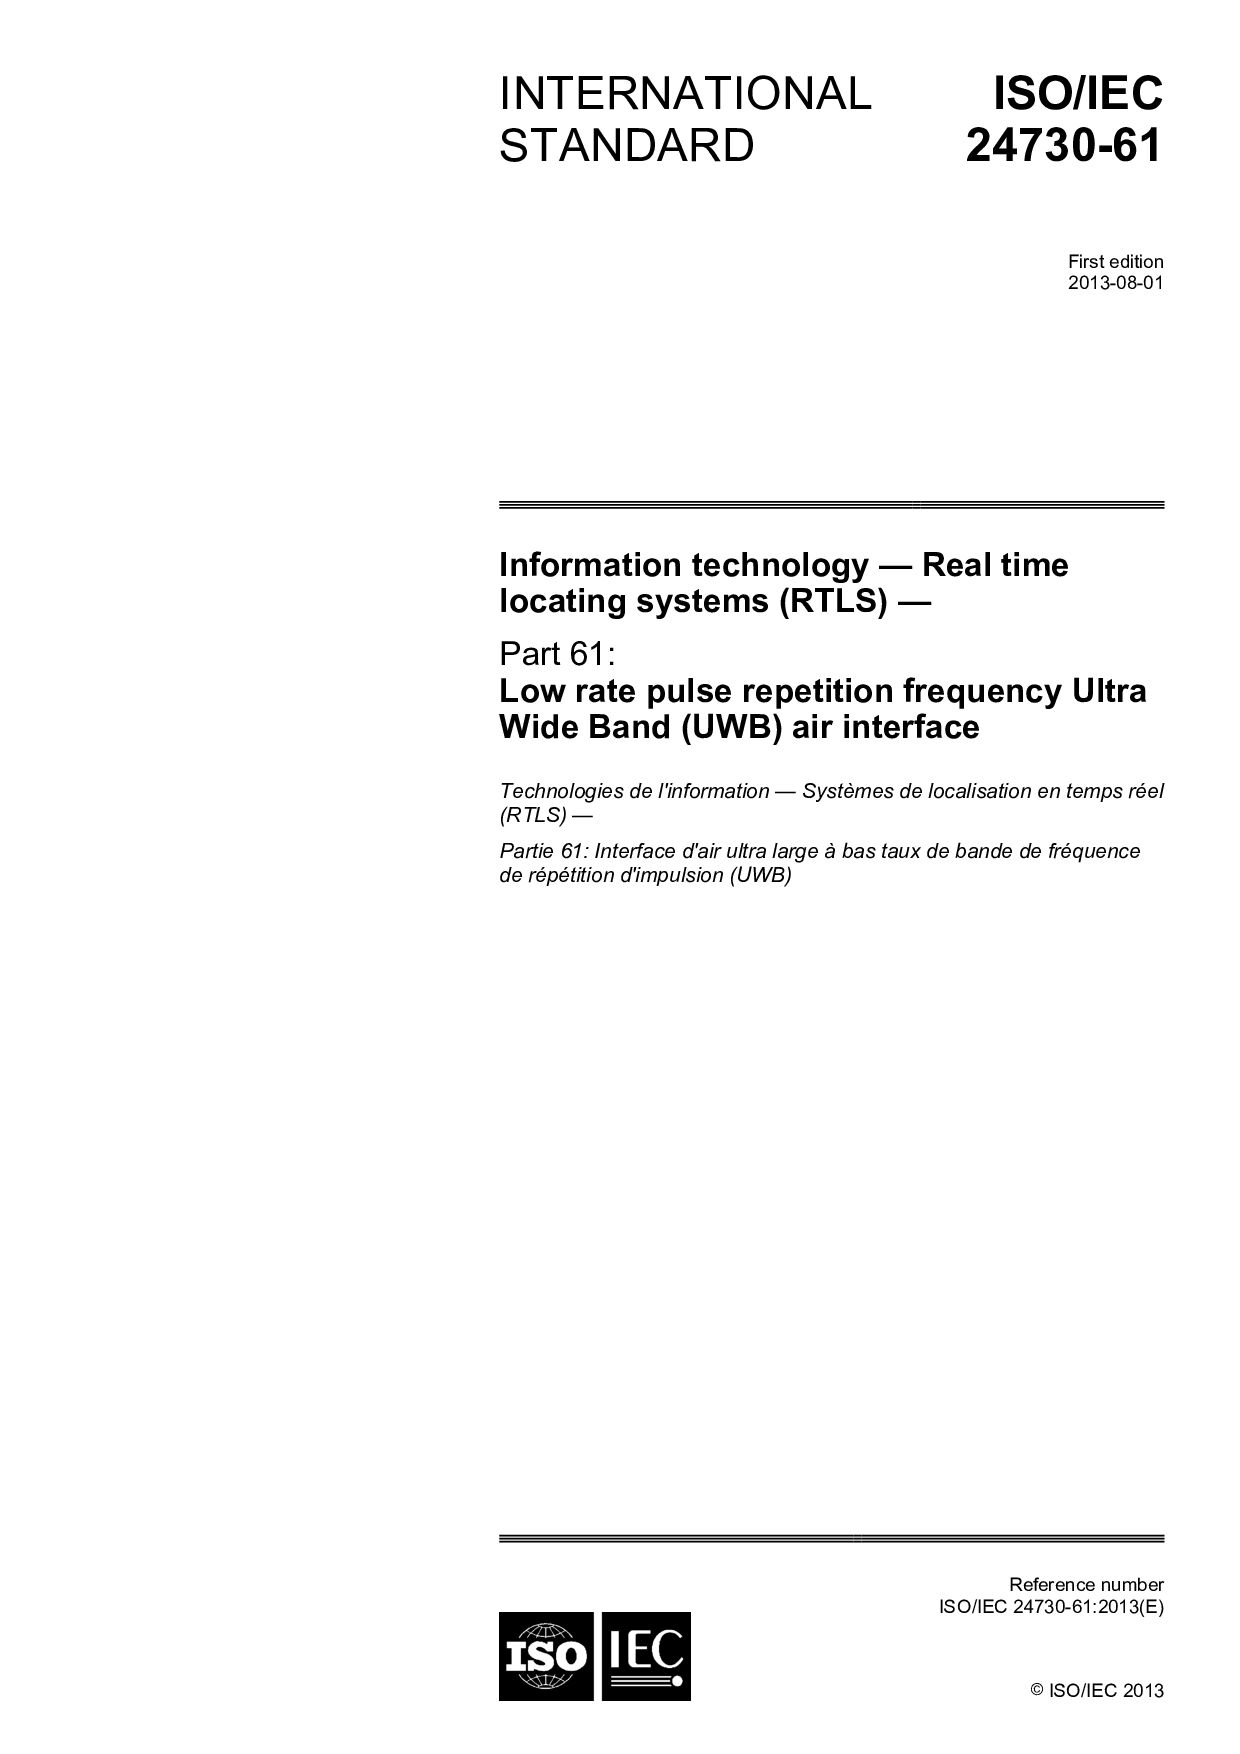 ISO/IEC 24730-61:2013